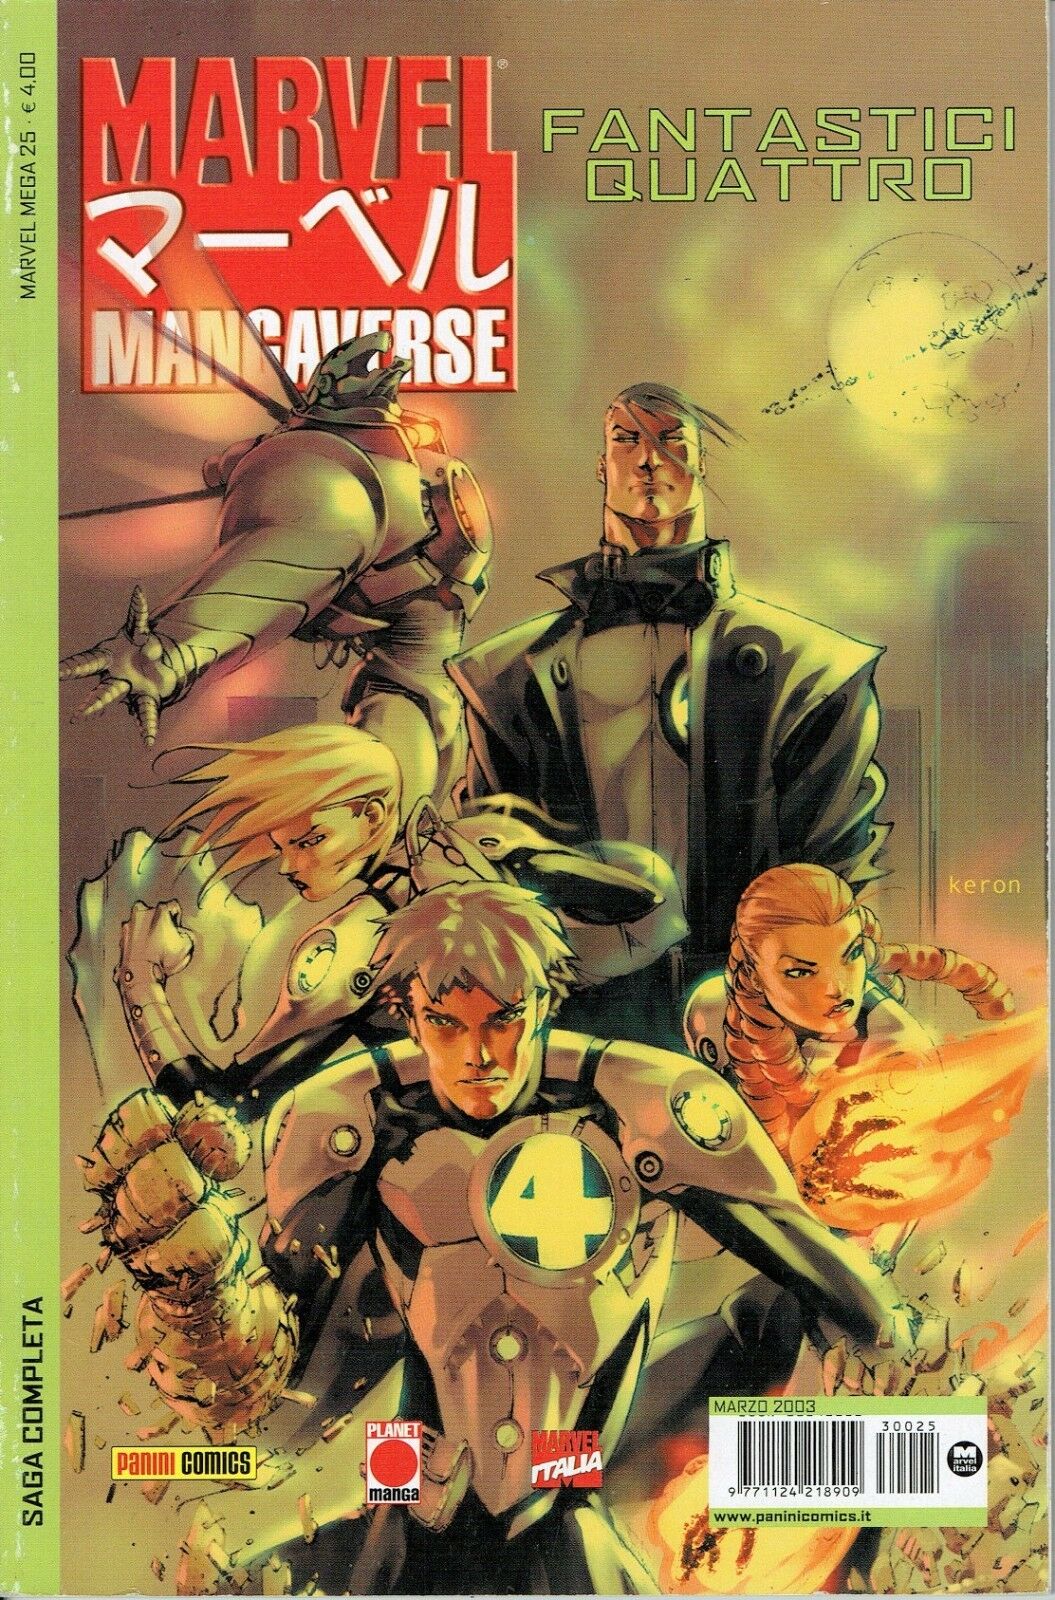 Marvel Mangaverse 2